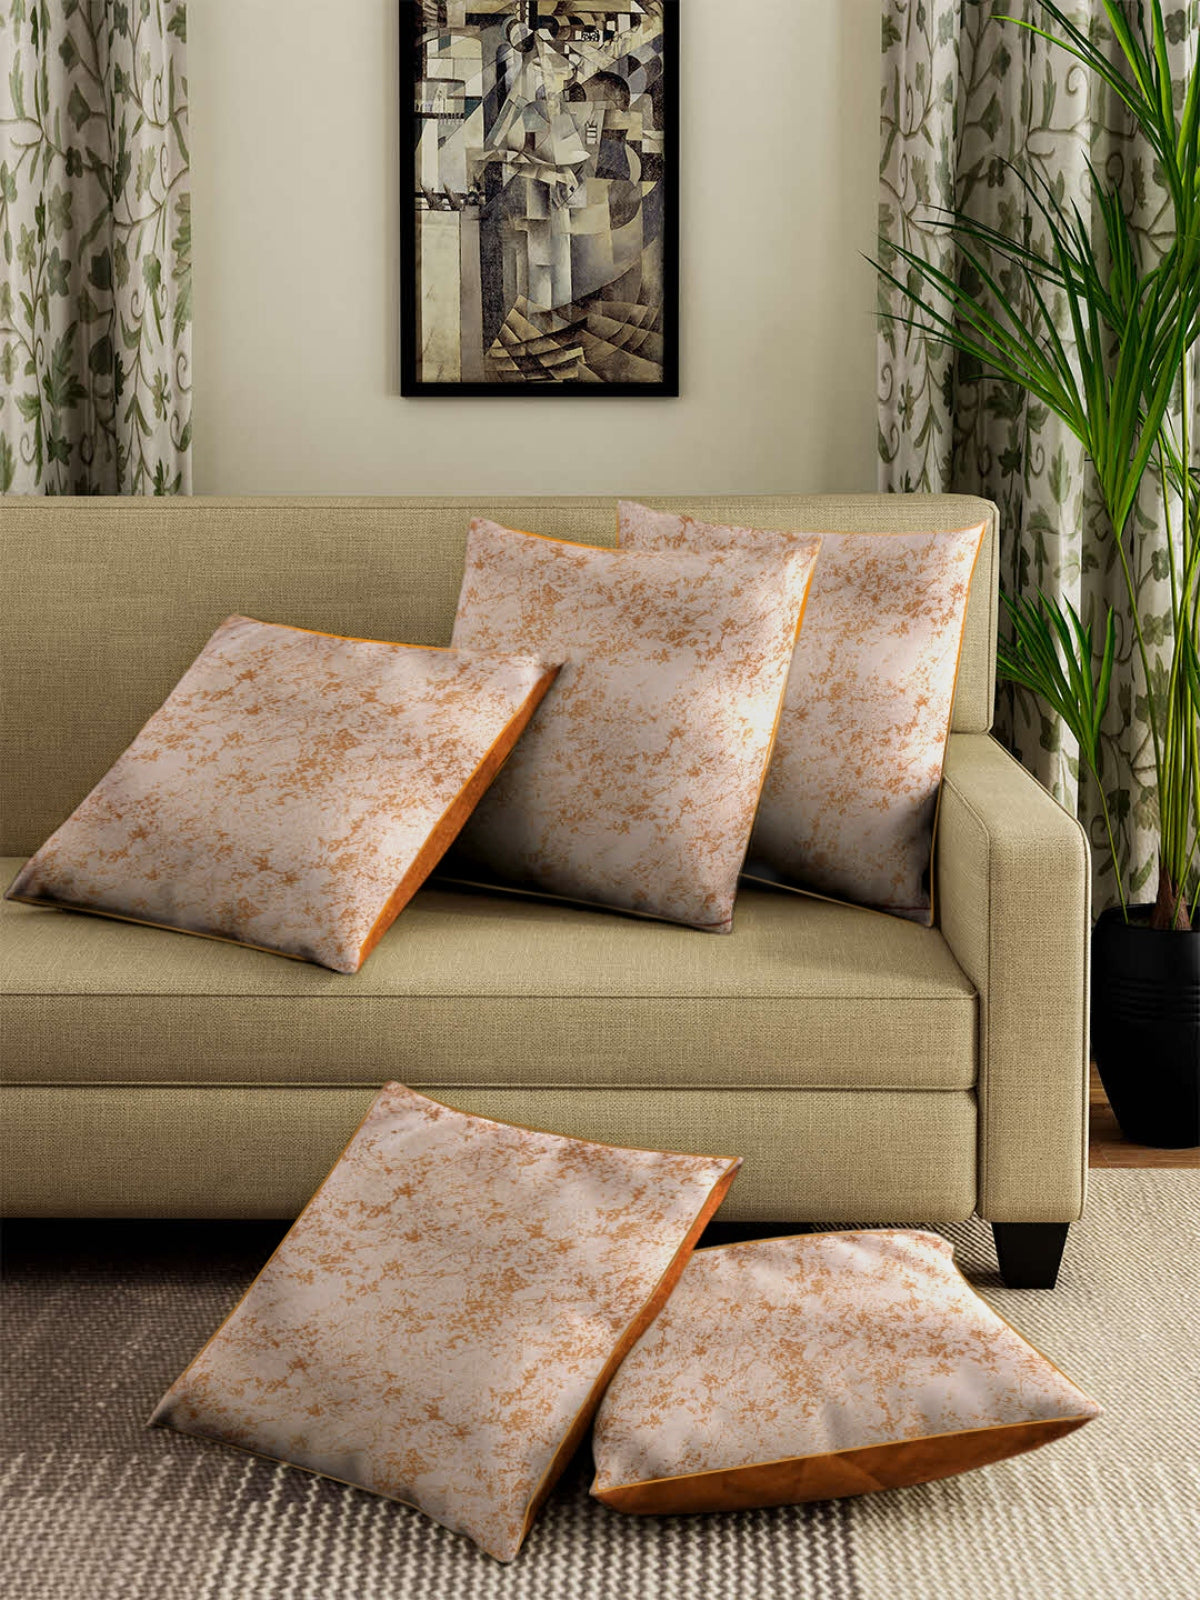 Soft Velvet Texture Designer Plain Cushion Cover 16x16 inches Set of 5 - Beige & Orange